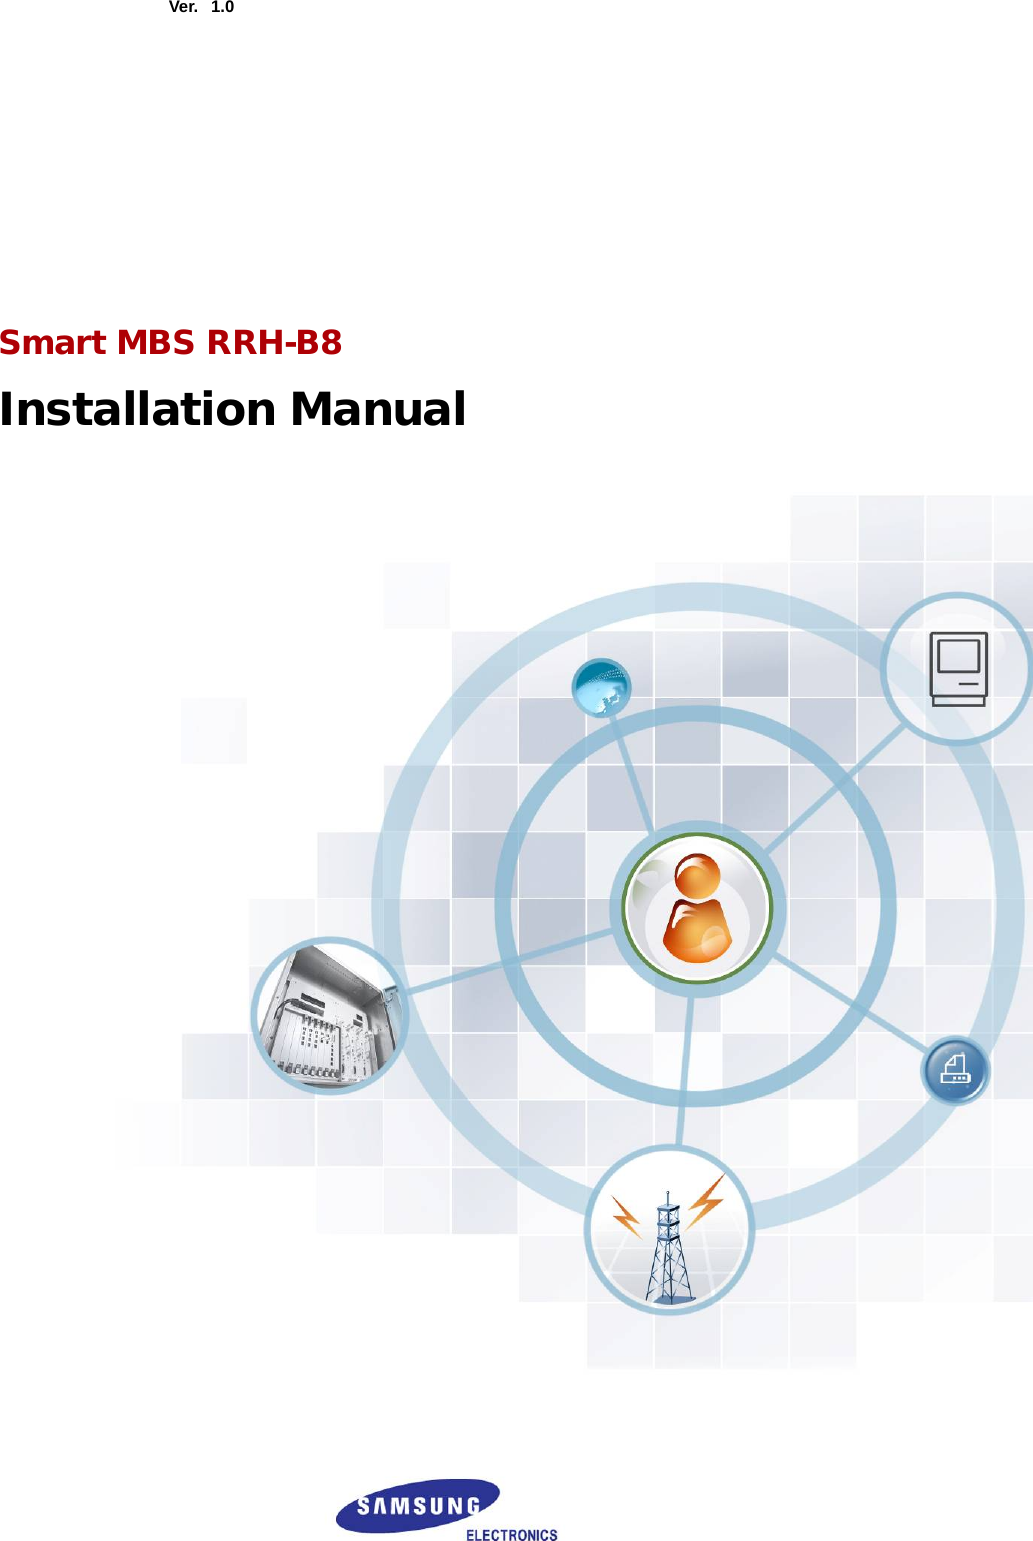  Ver.   1.0        Smart MBS RRH-B8 Installation Manual     